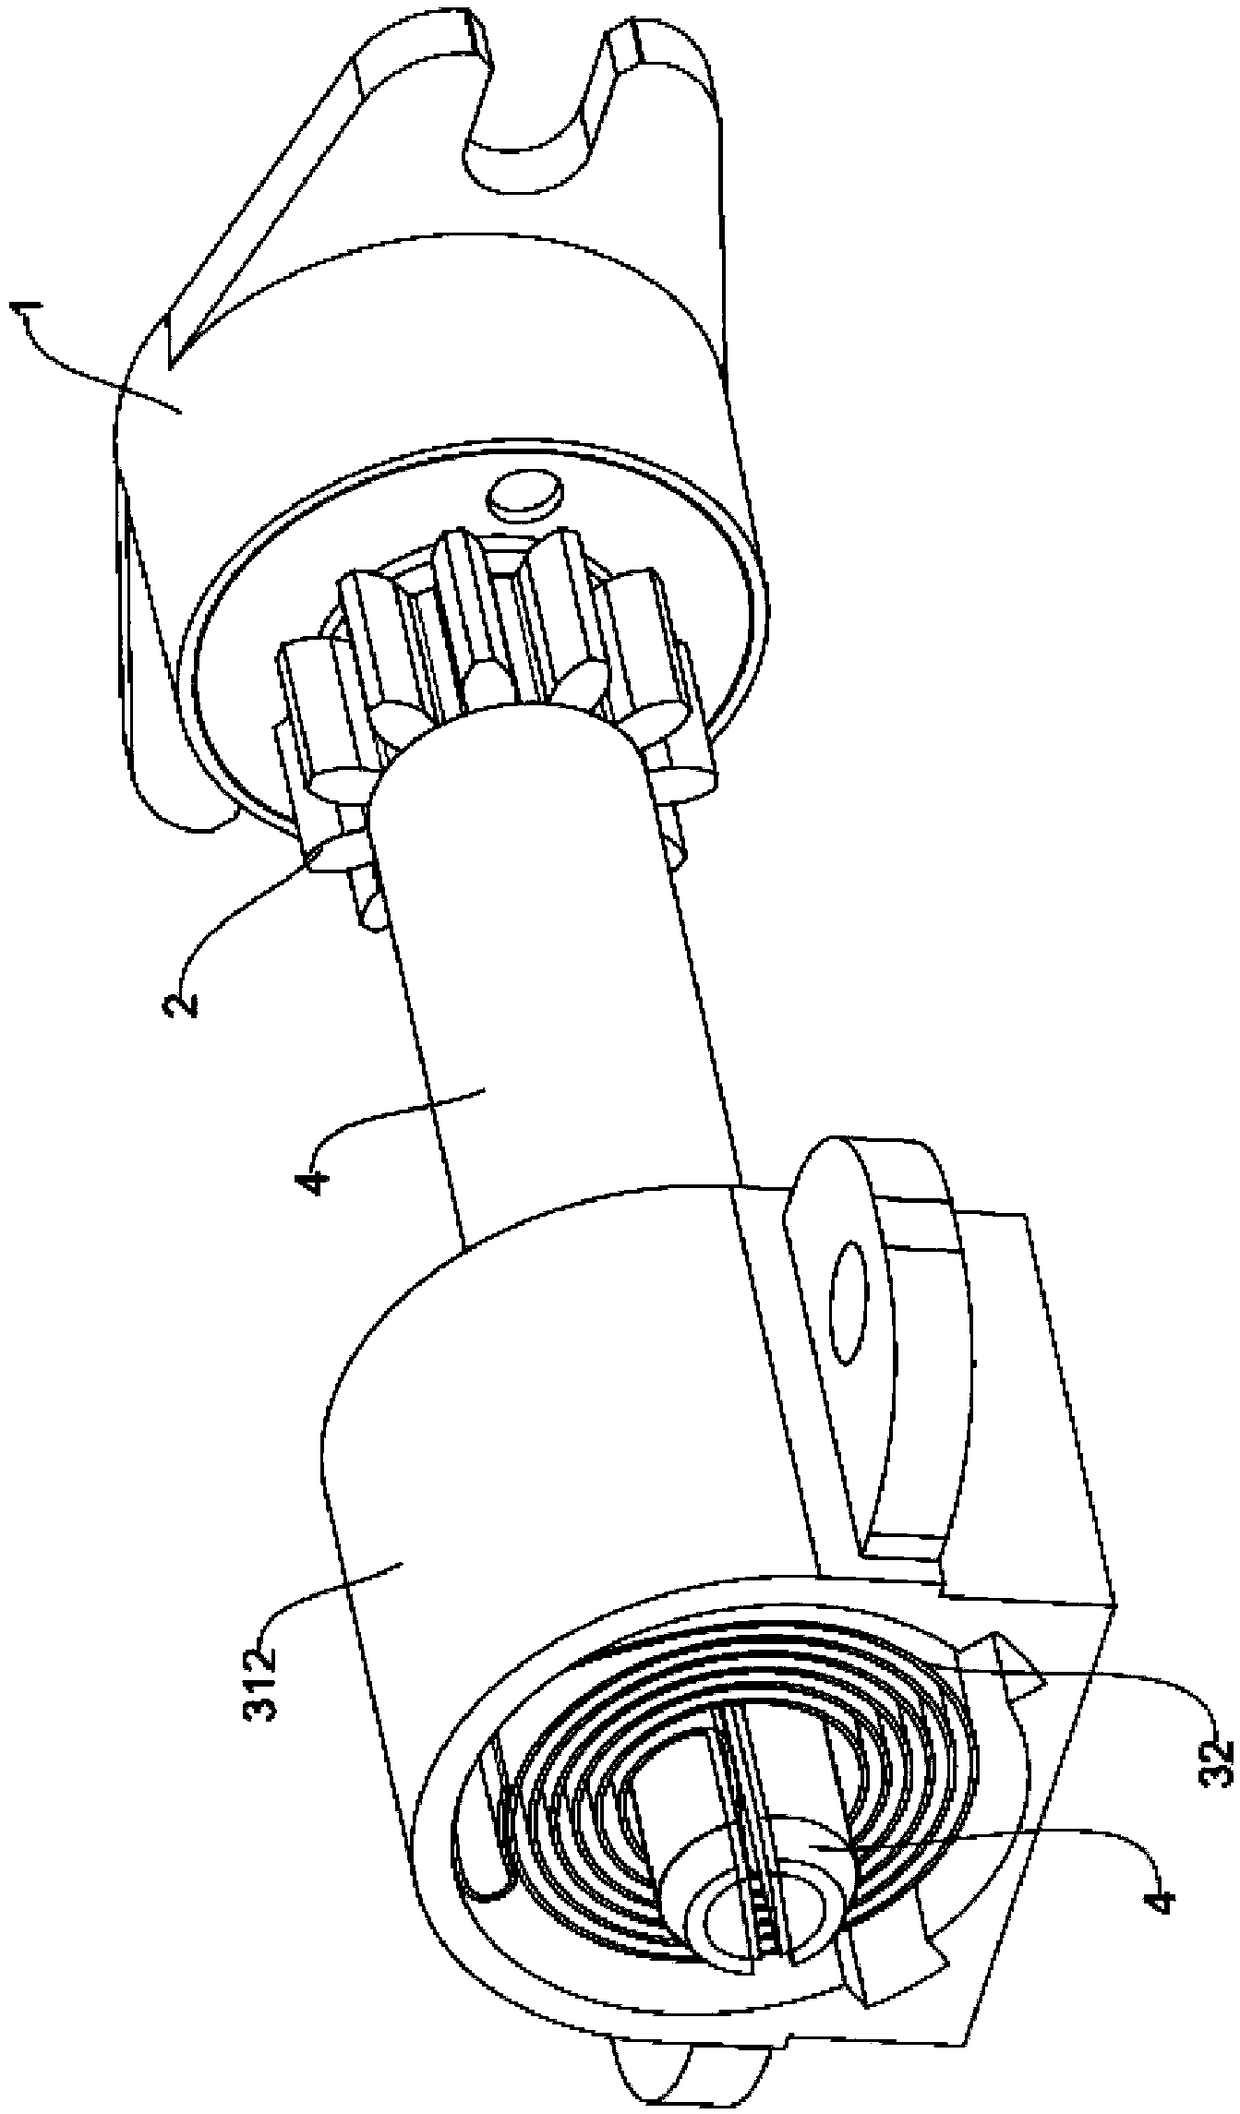 Transmission mechanism and washing machine